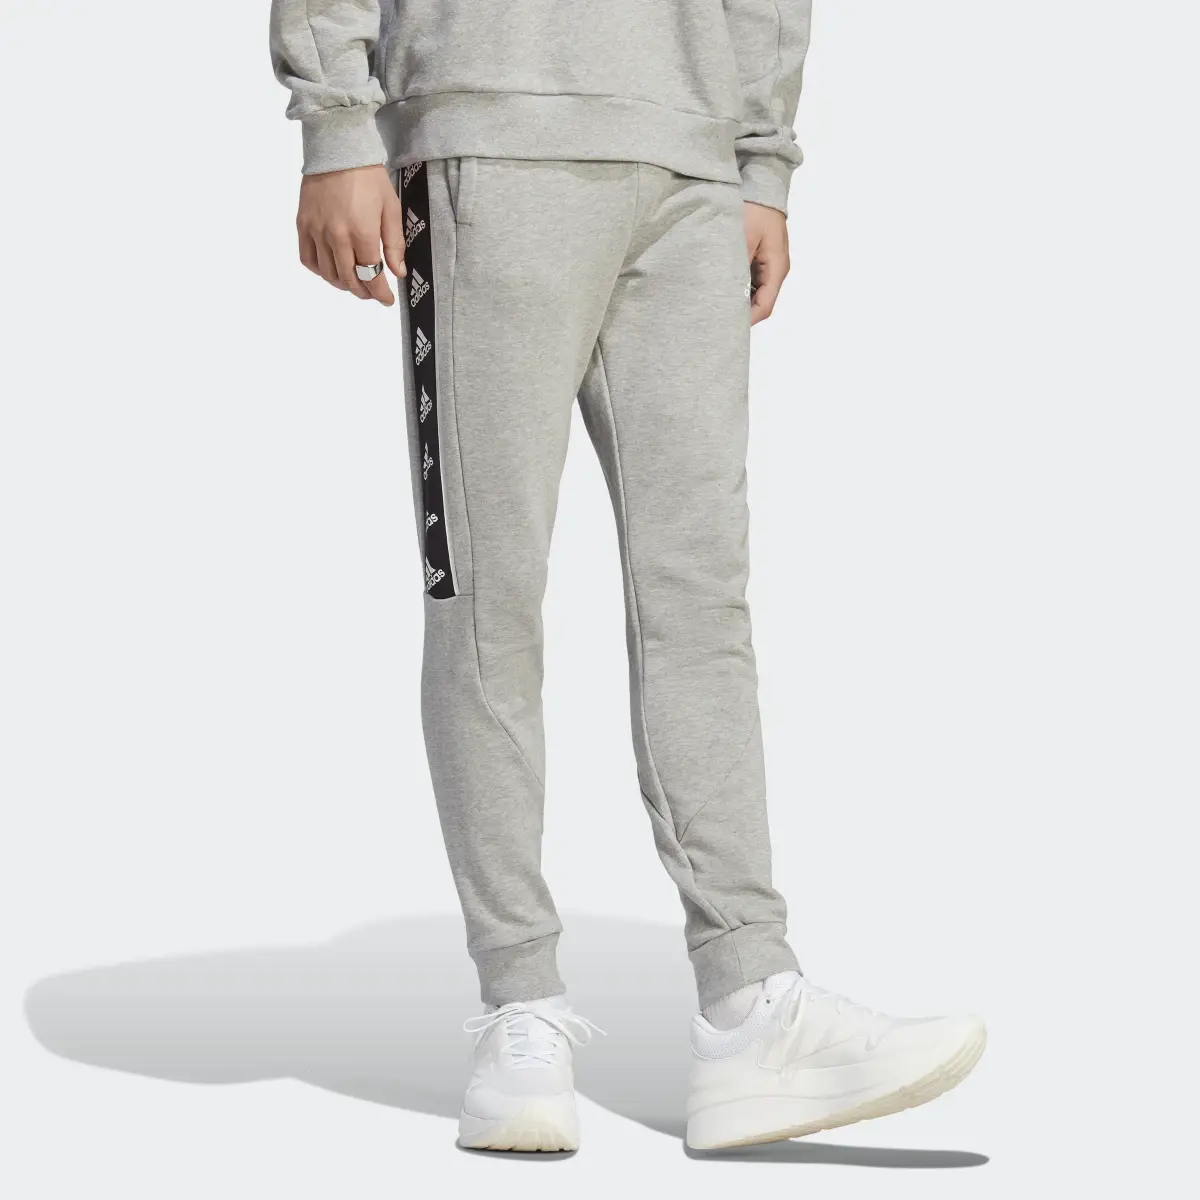 Adidas Brandlove Pants. 3